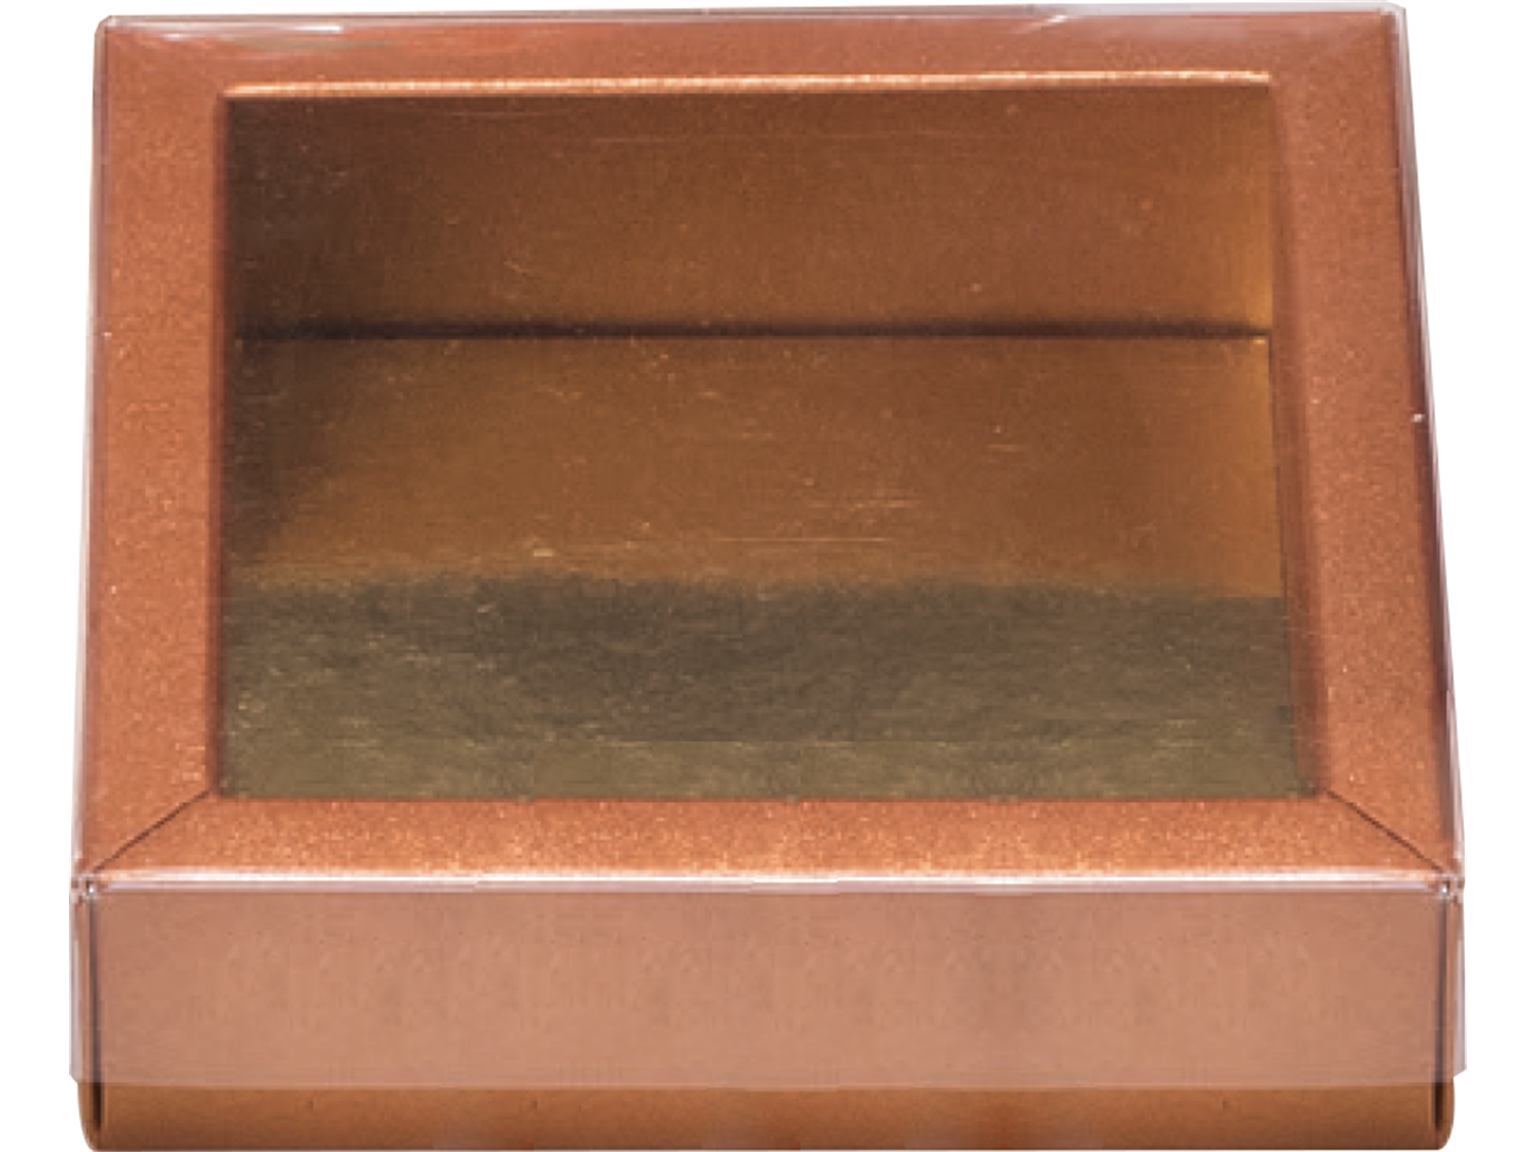 FENSTERBOX METALLICS  Metallics, Fensterbox Nr. 1, 90x90/29mm